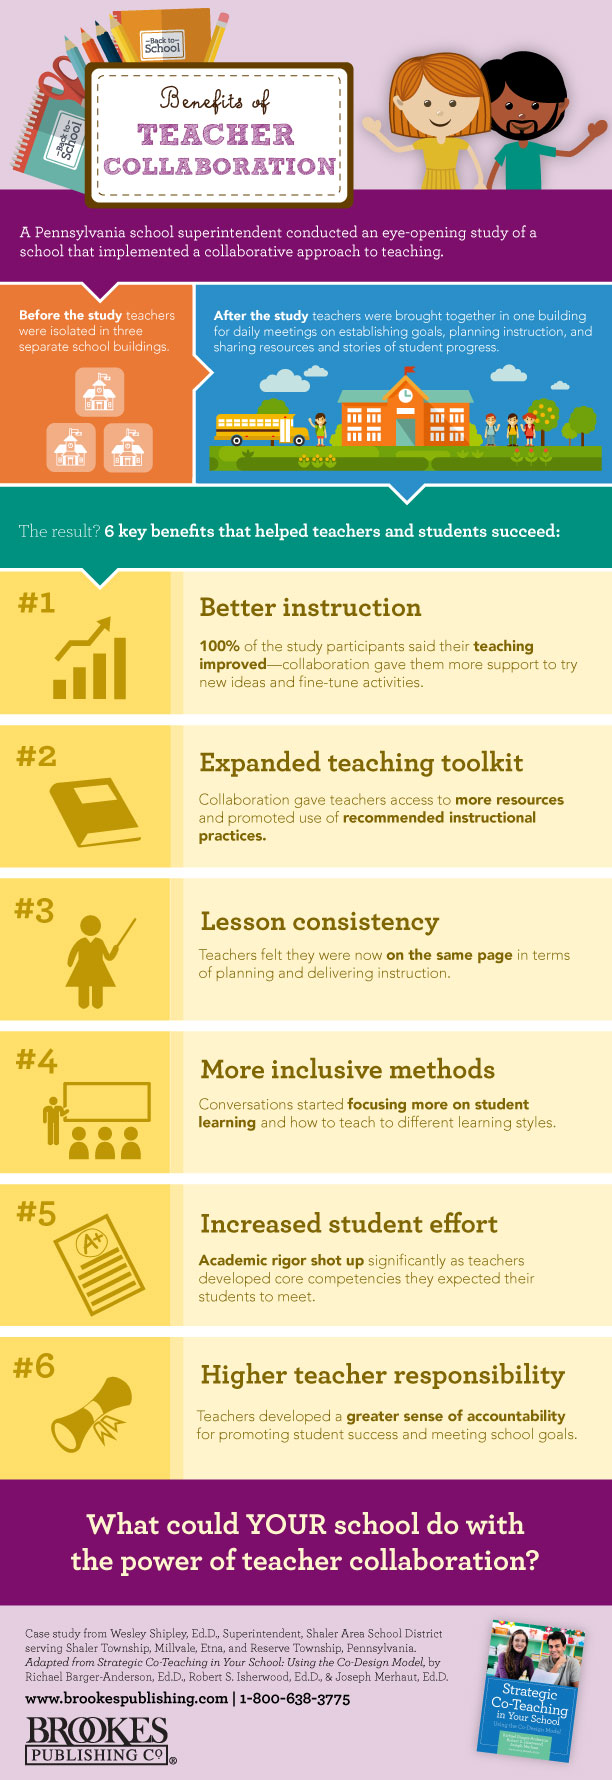 teacher collaboration benefits